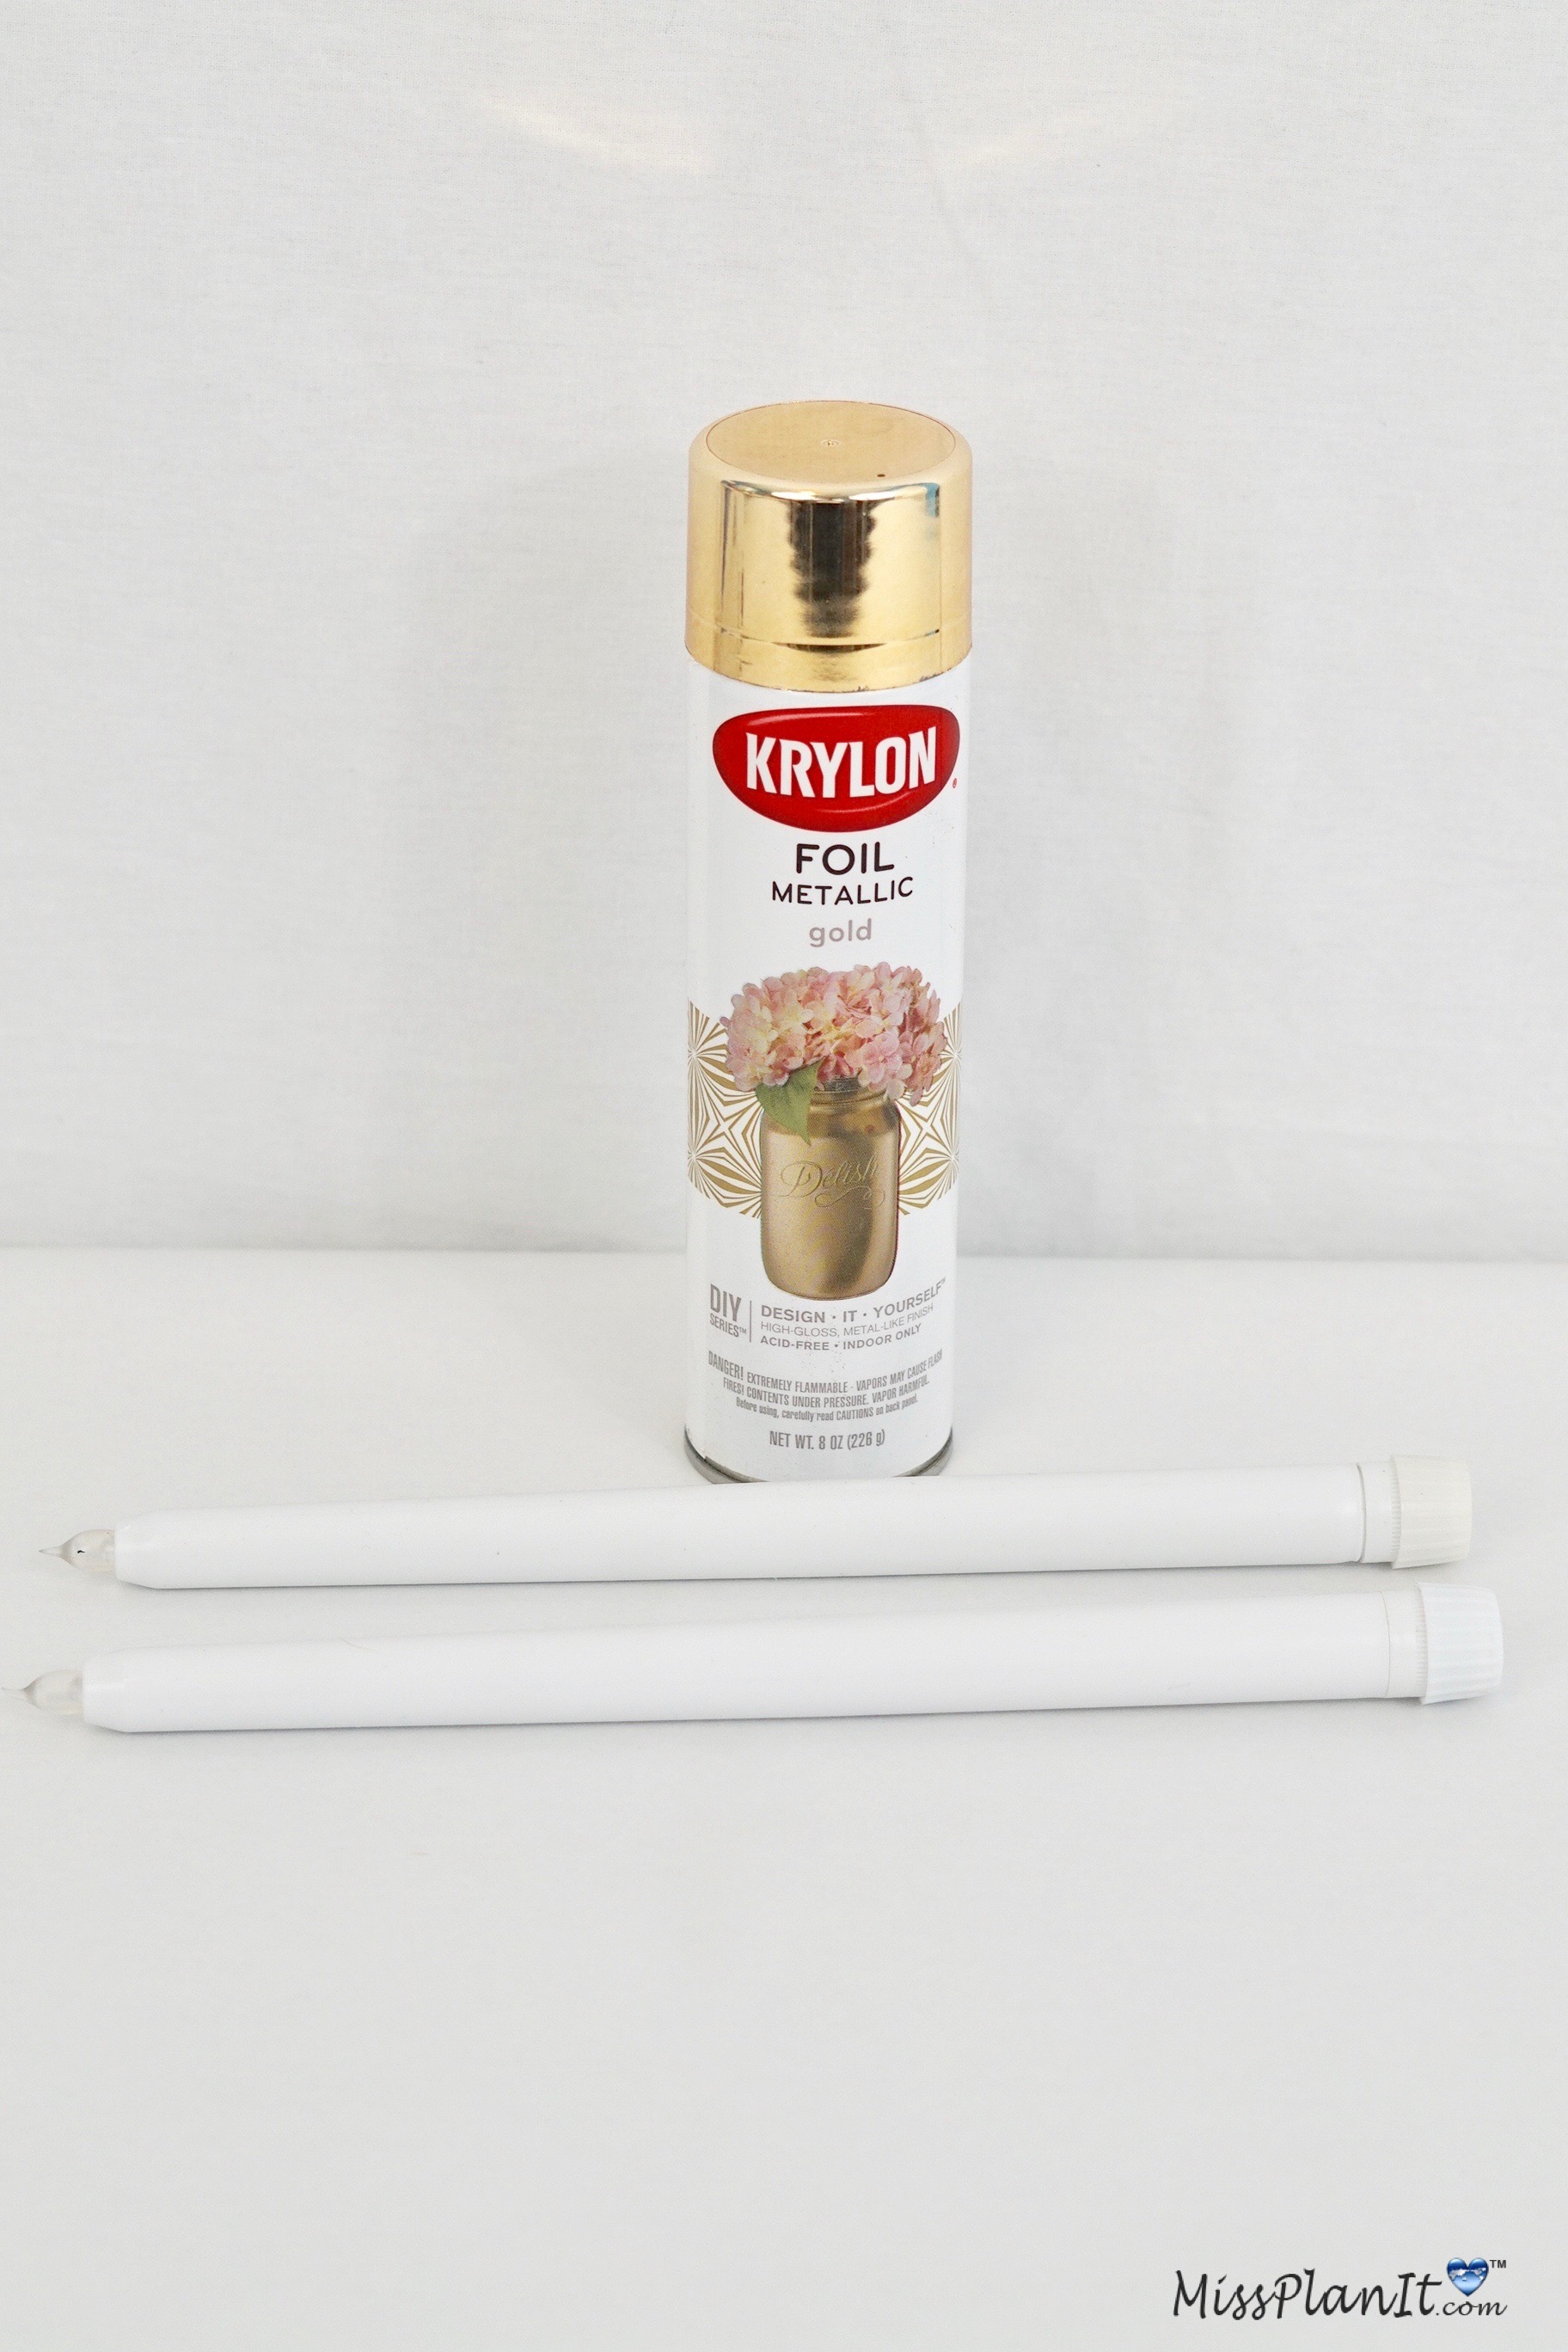 Krylon Foil High Gloss Gold Metallic Spray Paint 8 oz.